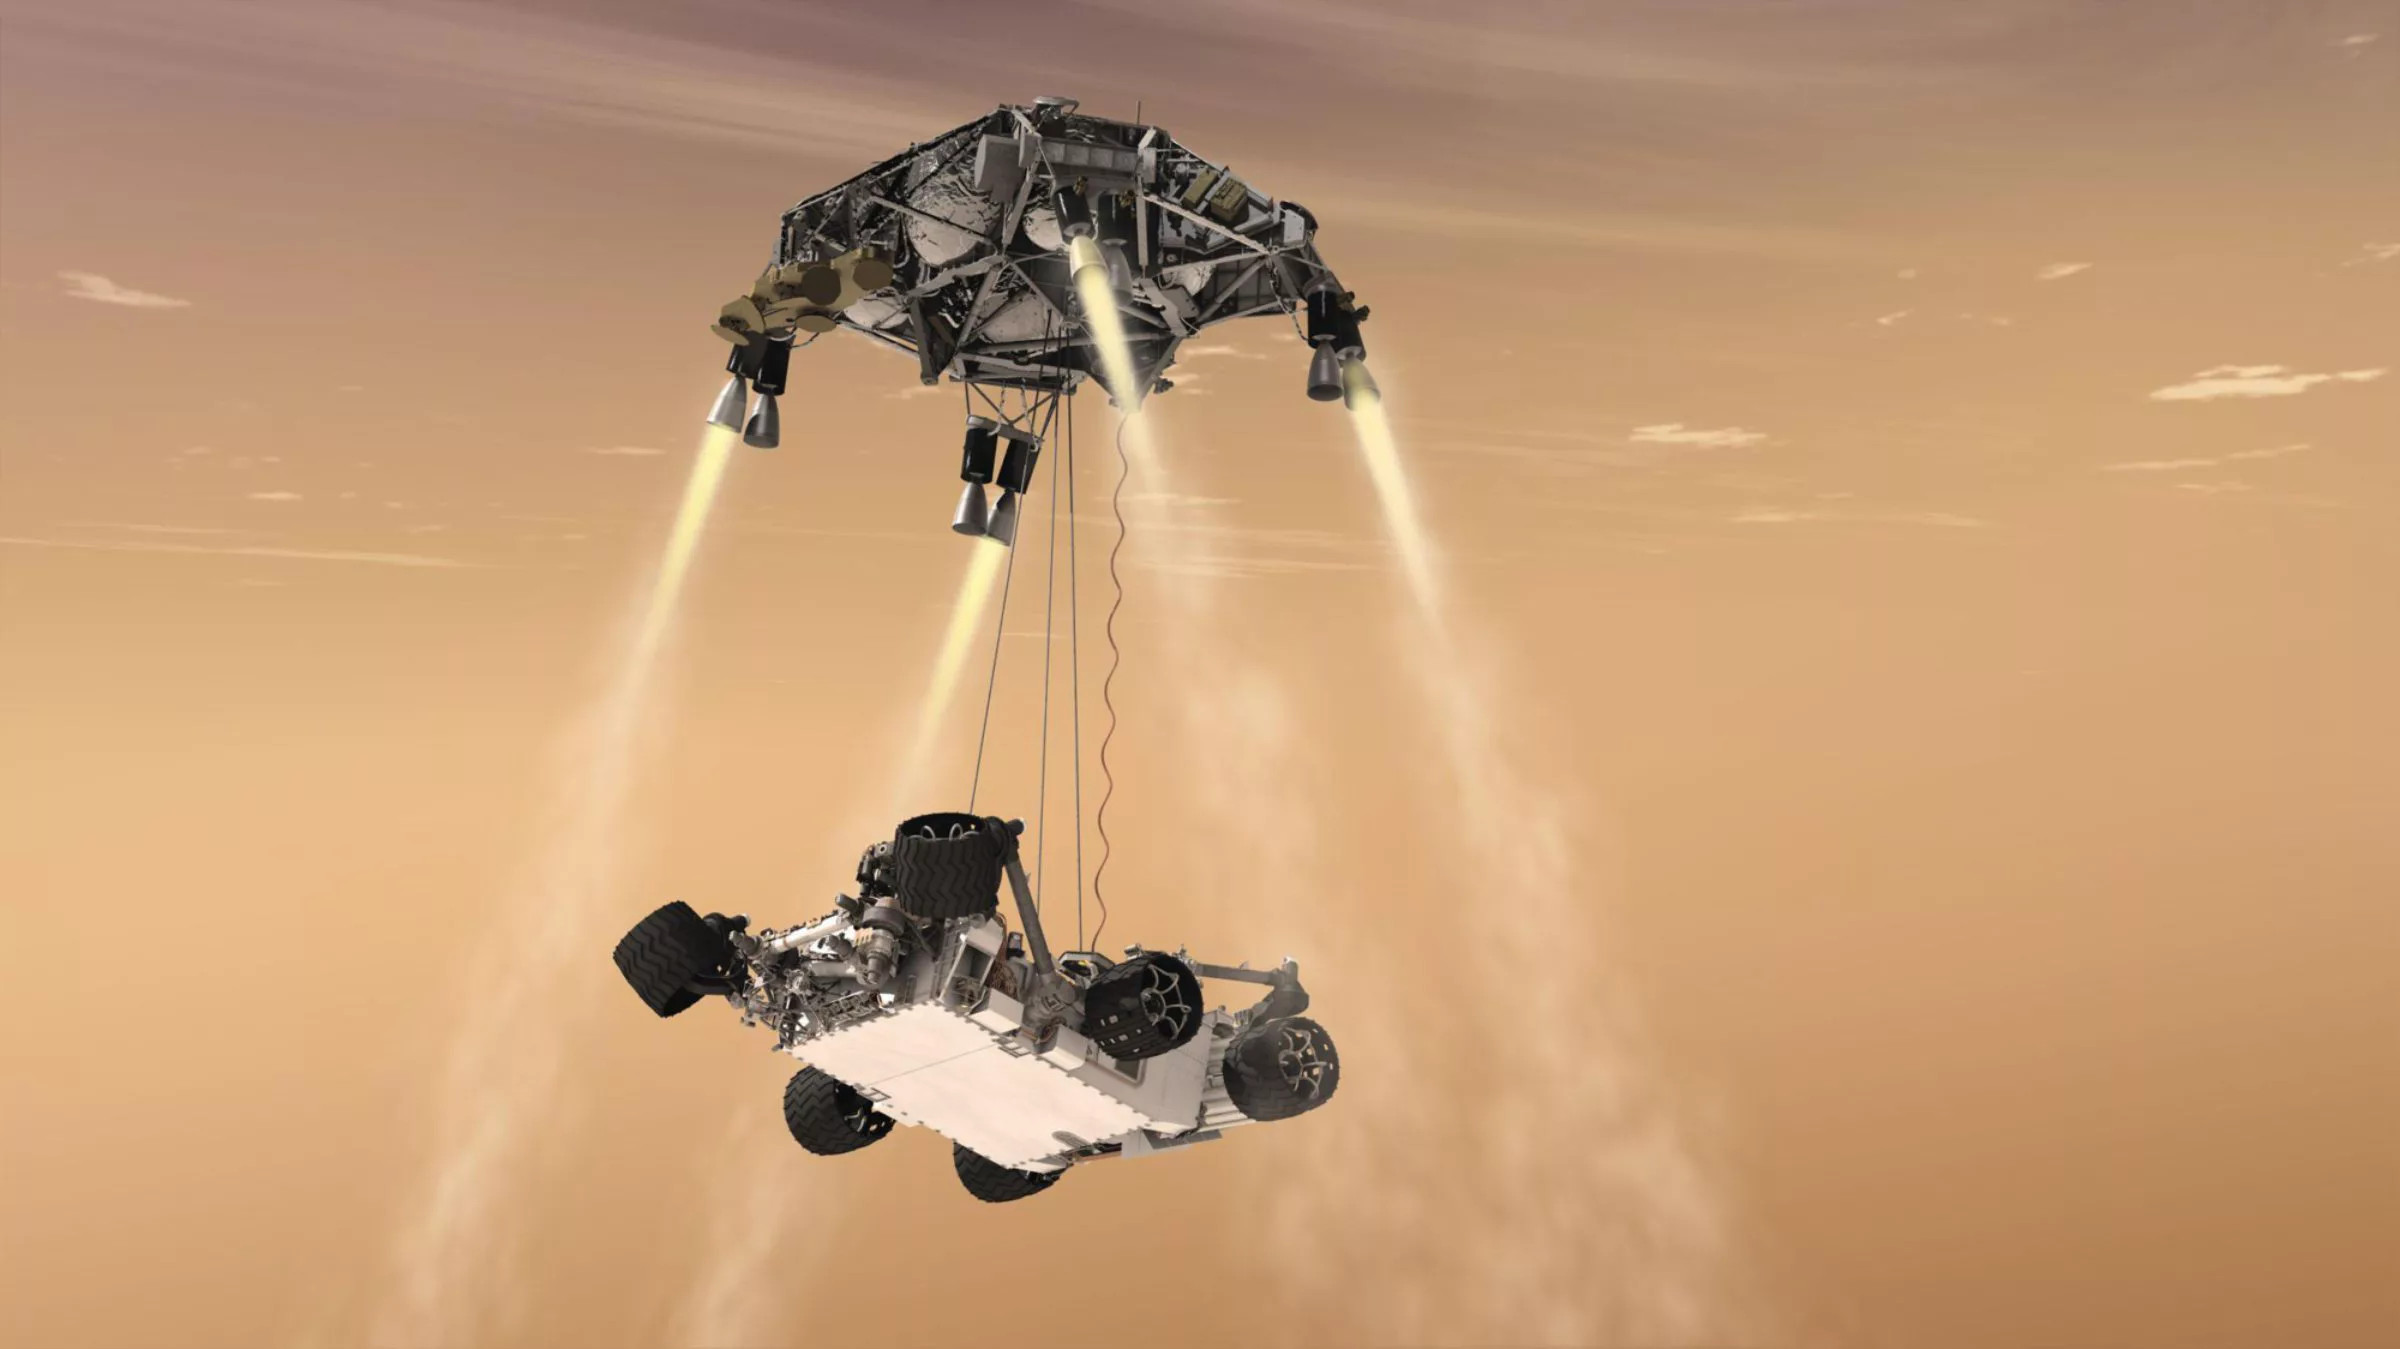 Read more about the article Curiosity’s skycrane maneuver